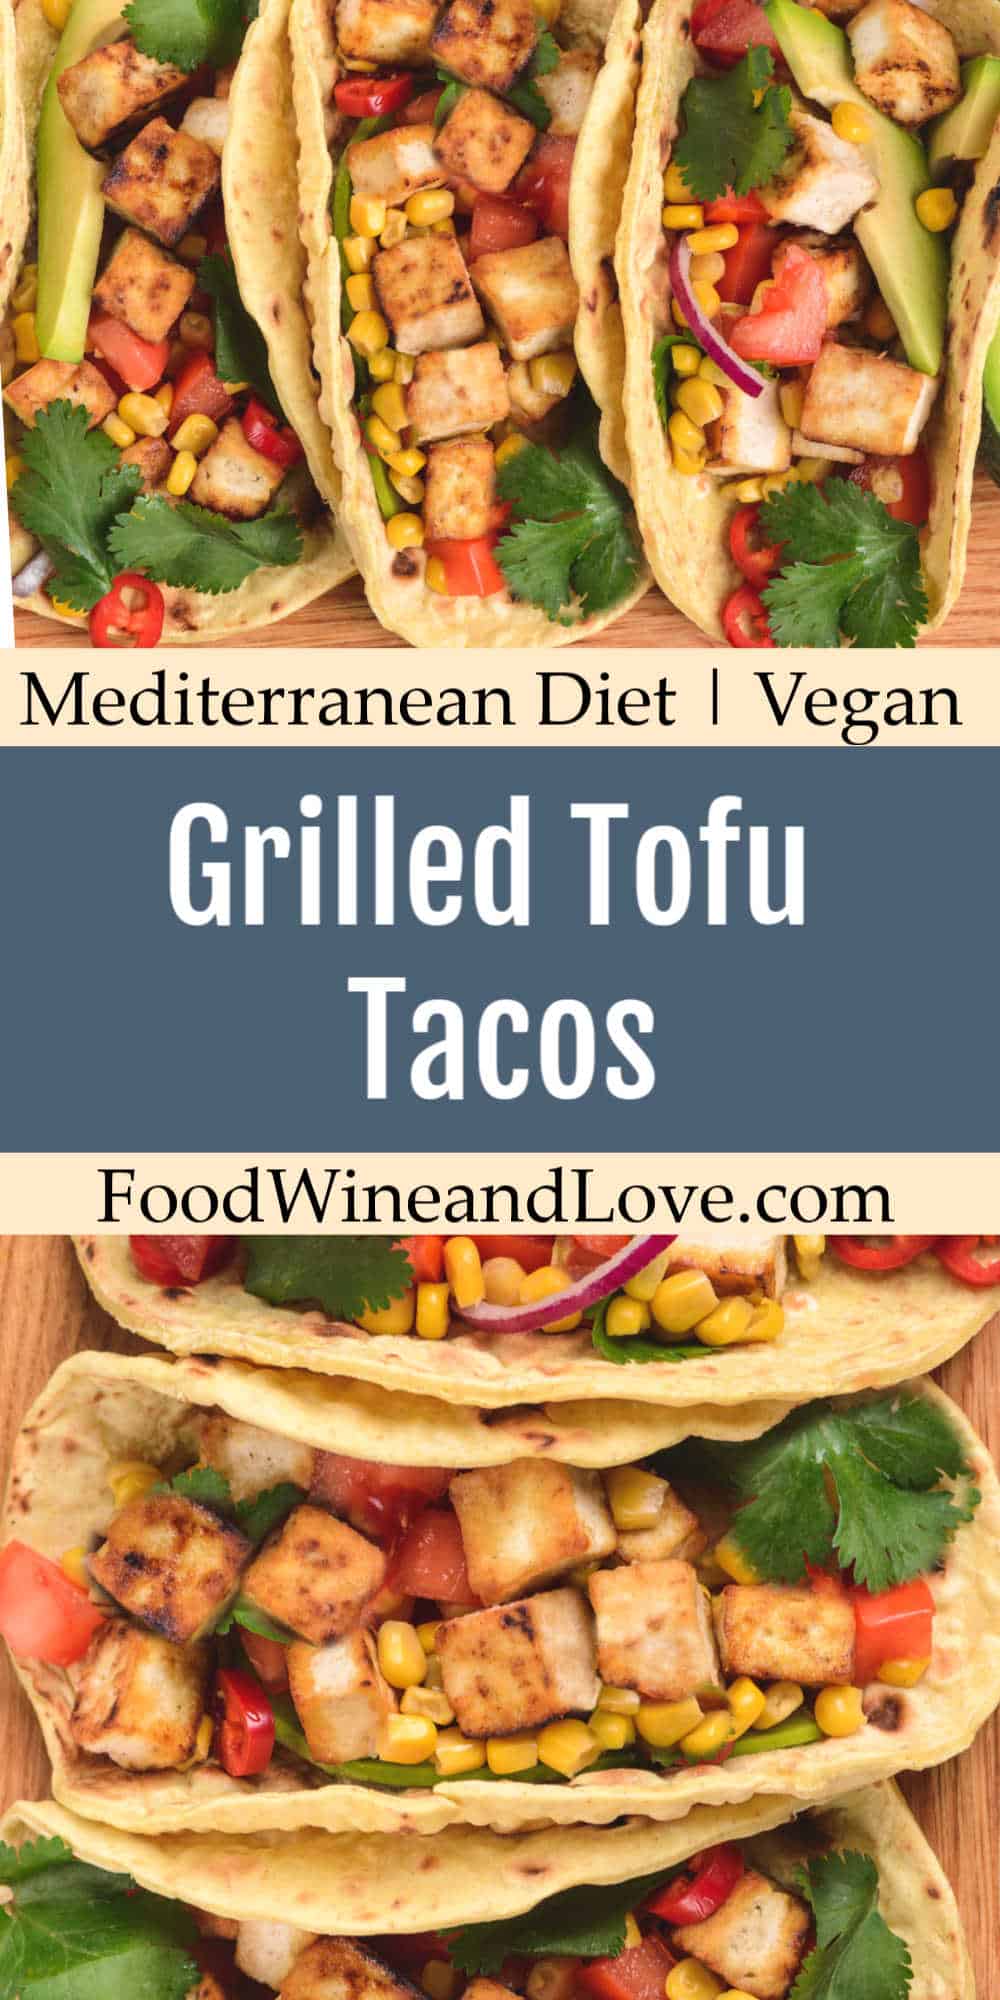 Grilled Tofu Tacos